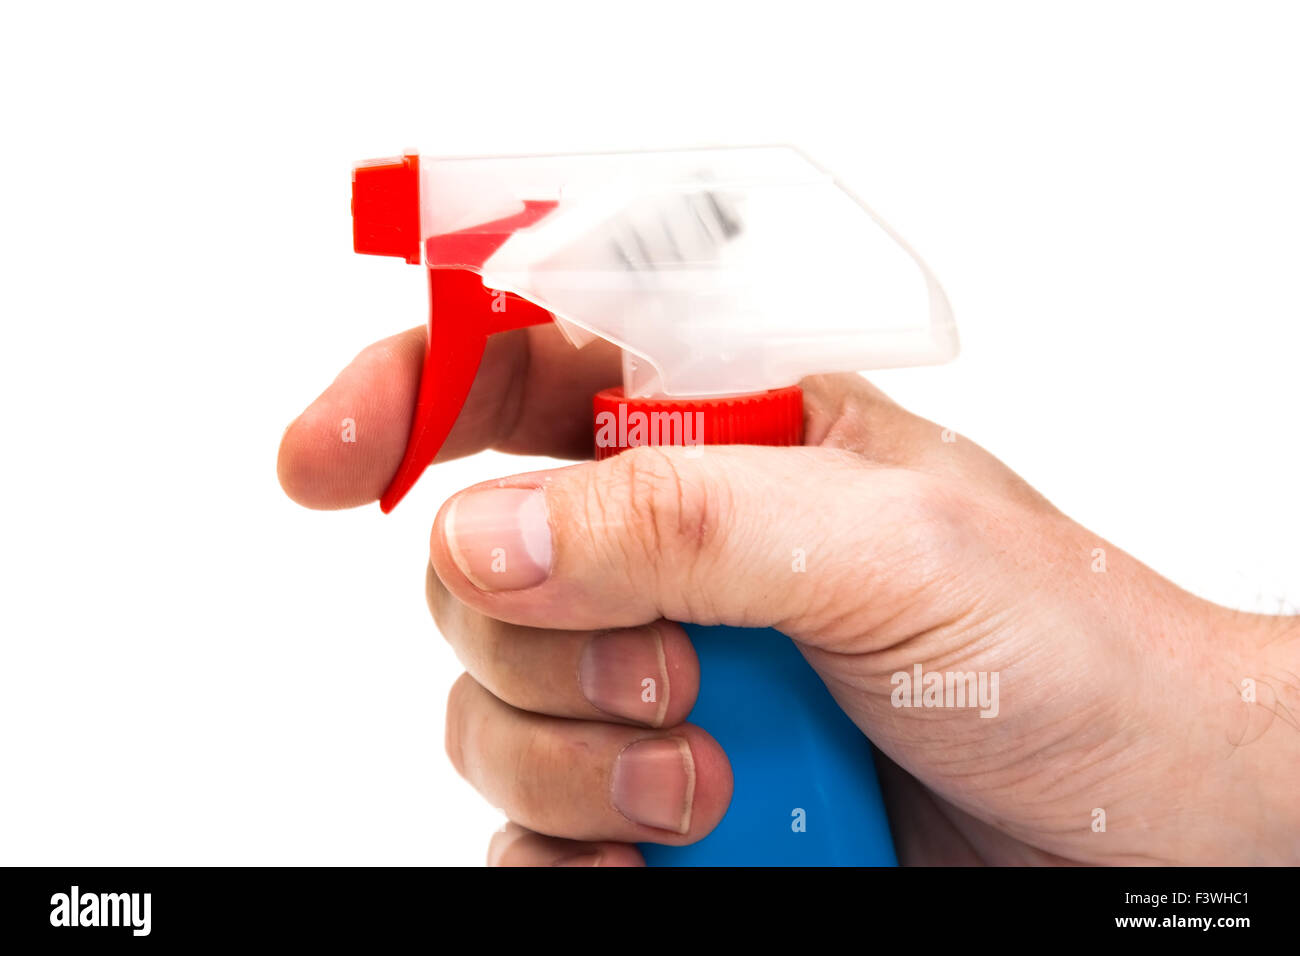 sprayer in hand Stock Photo